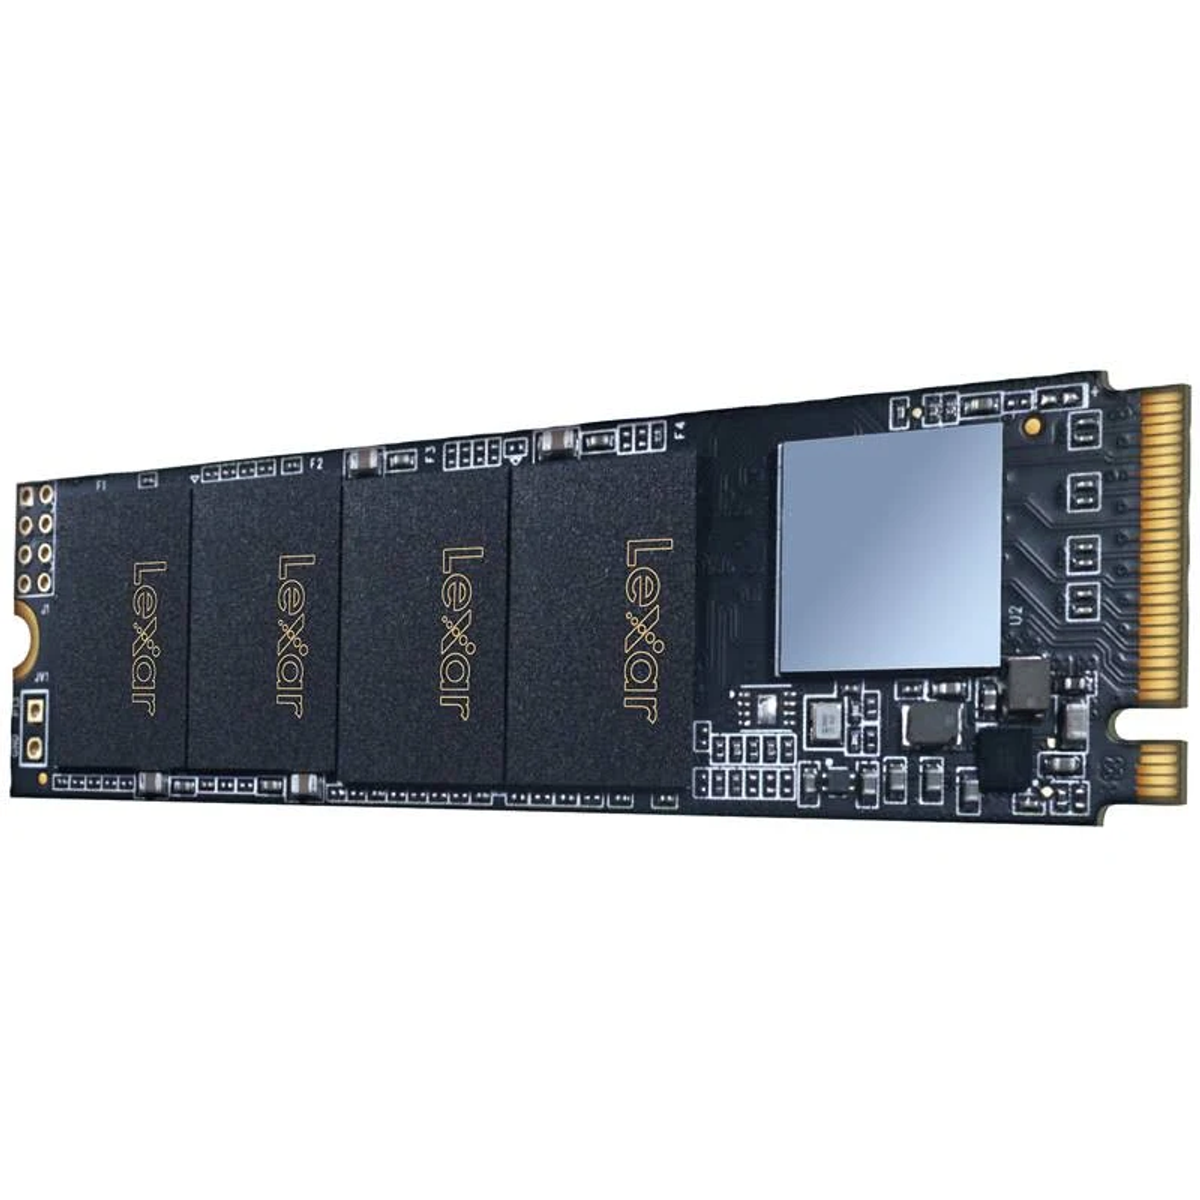 LEXAR LNM610-500RB, intern SSD, 500 GB